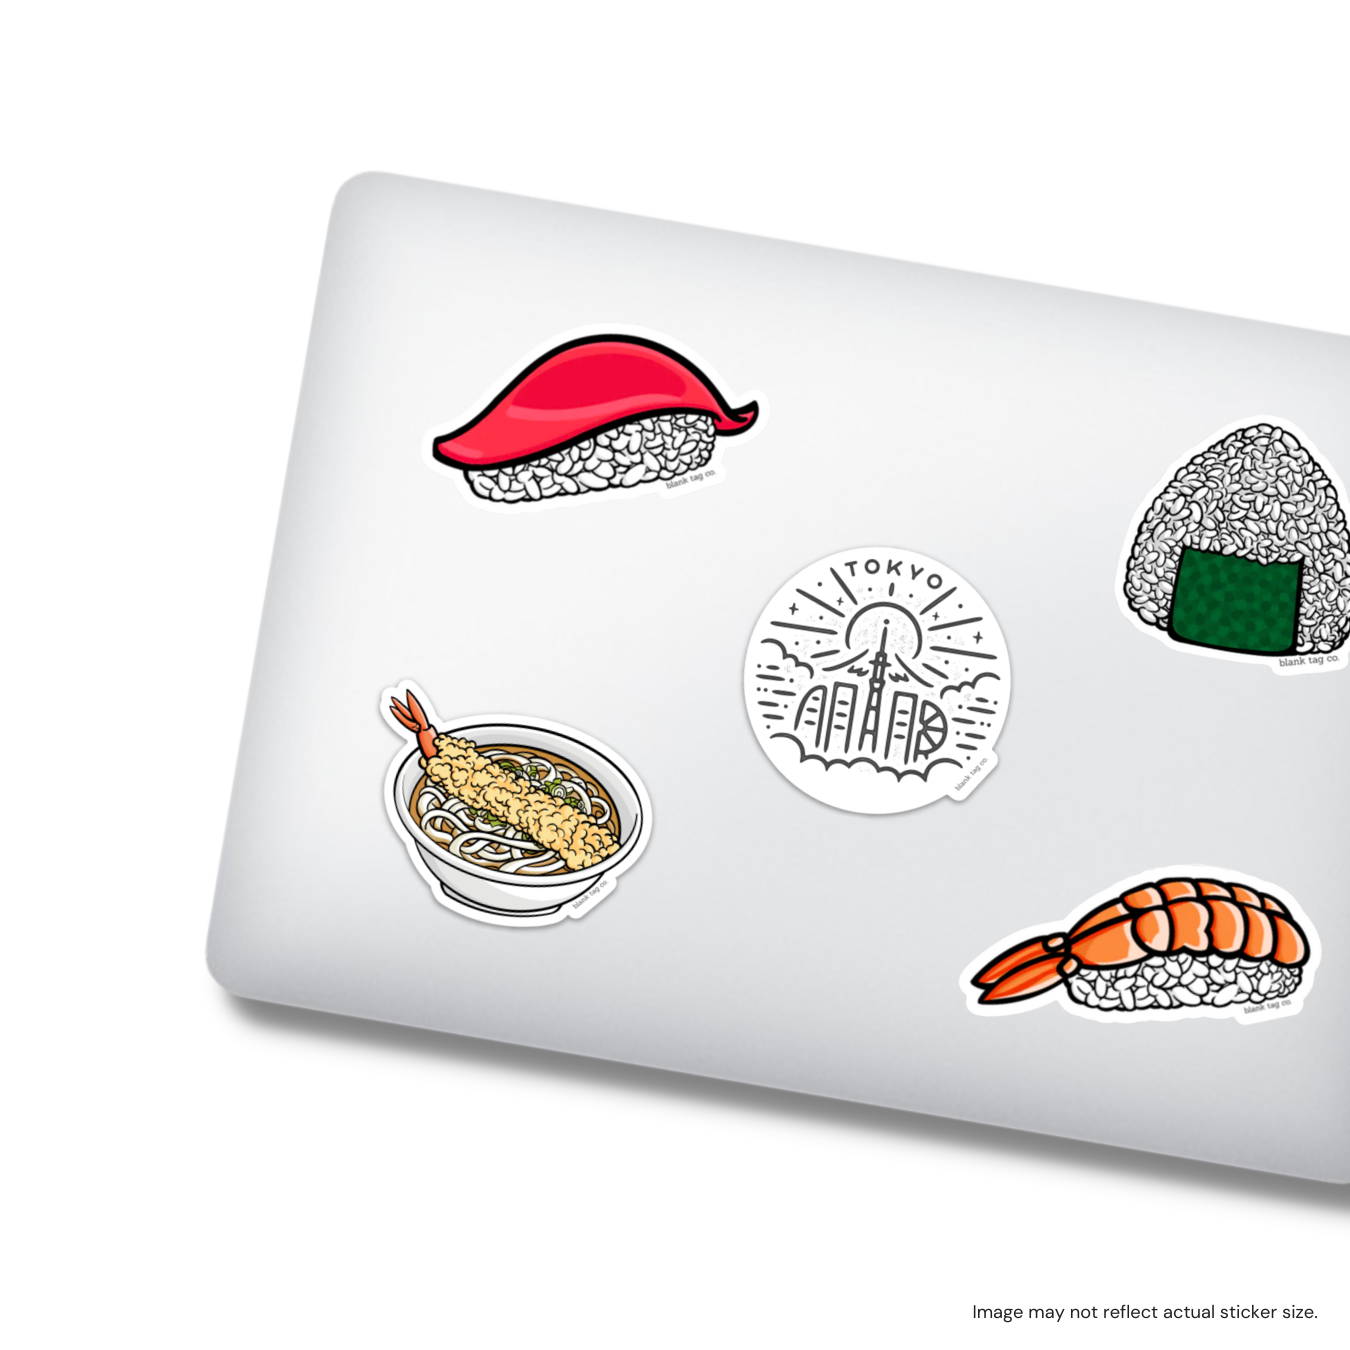 The Tuna Sushi Sticker